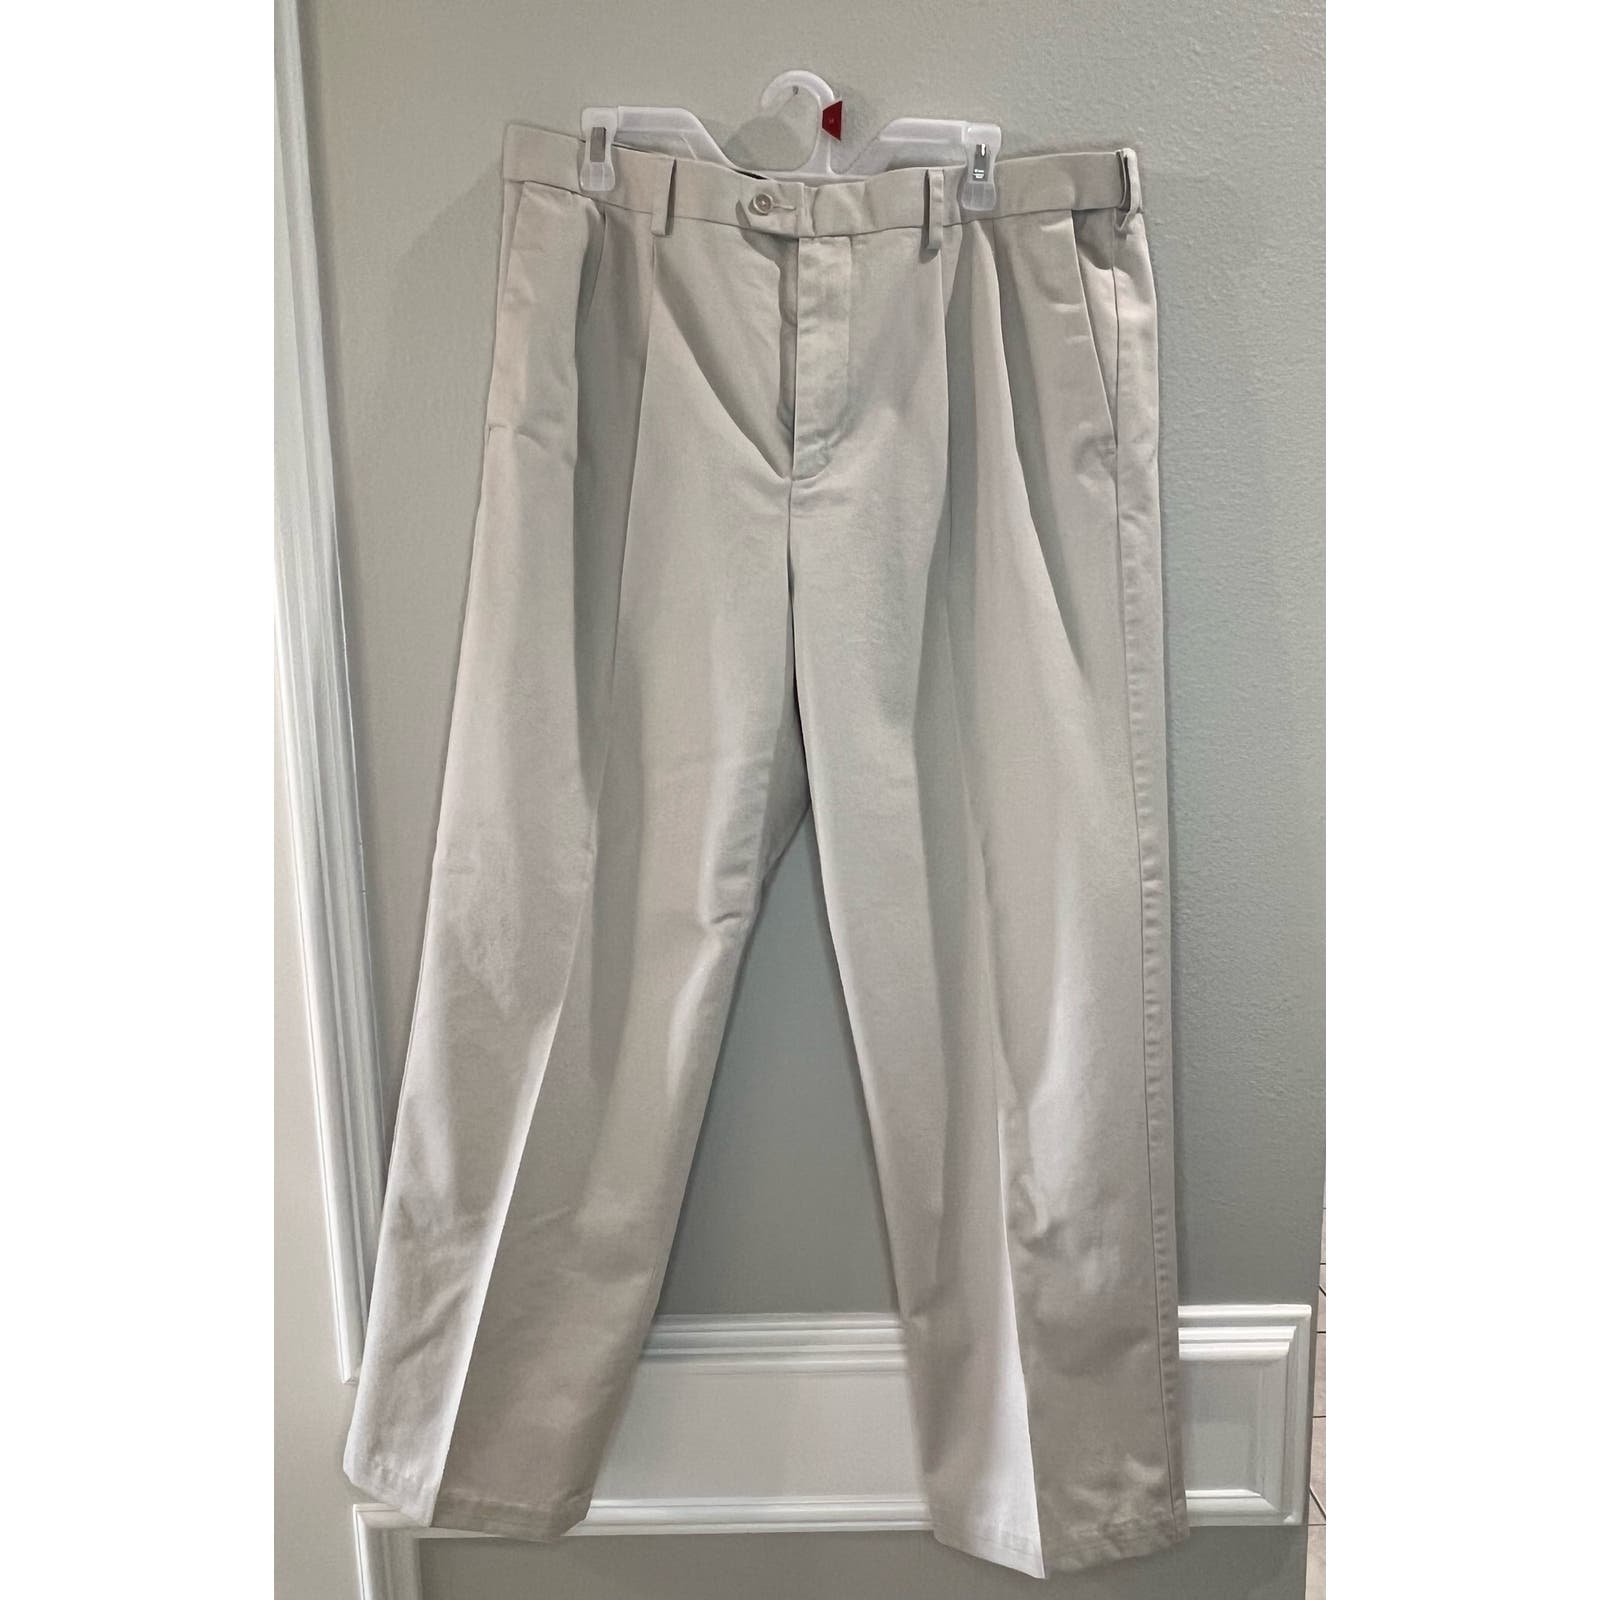 2 Pair Used Men´s Croft & Barrow Khaki Office Dress Pants Size 38x32 qUNl6PYFl